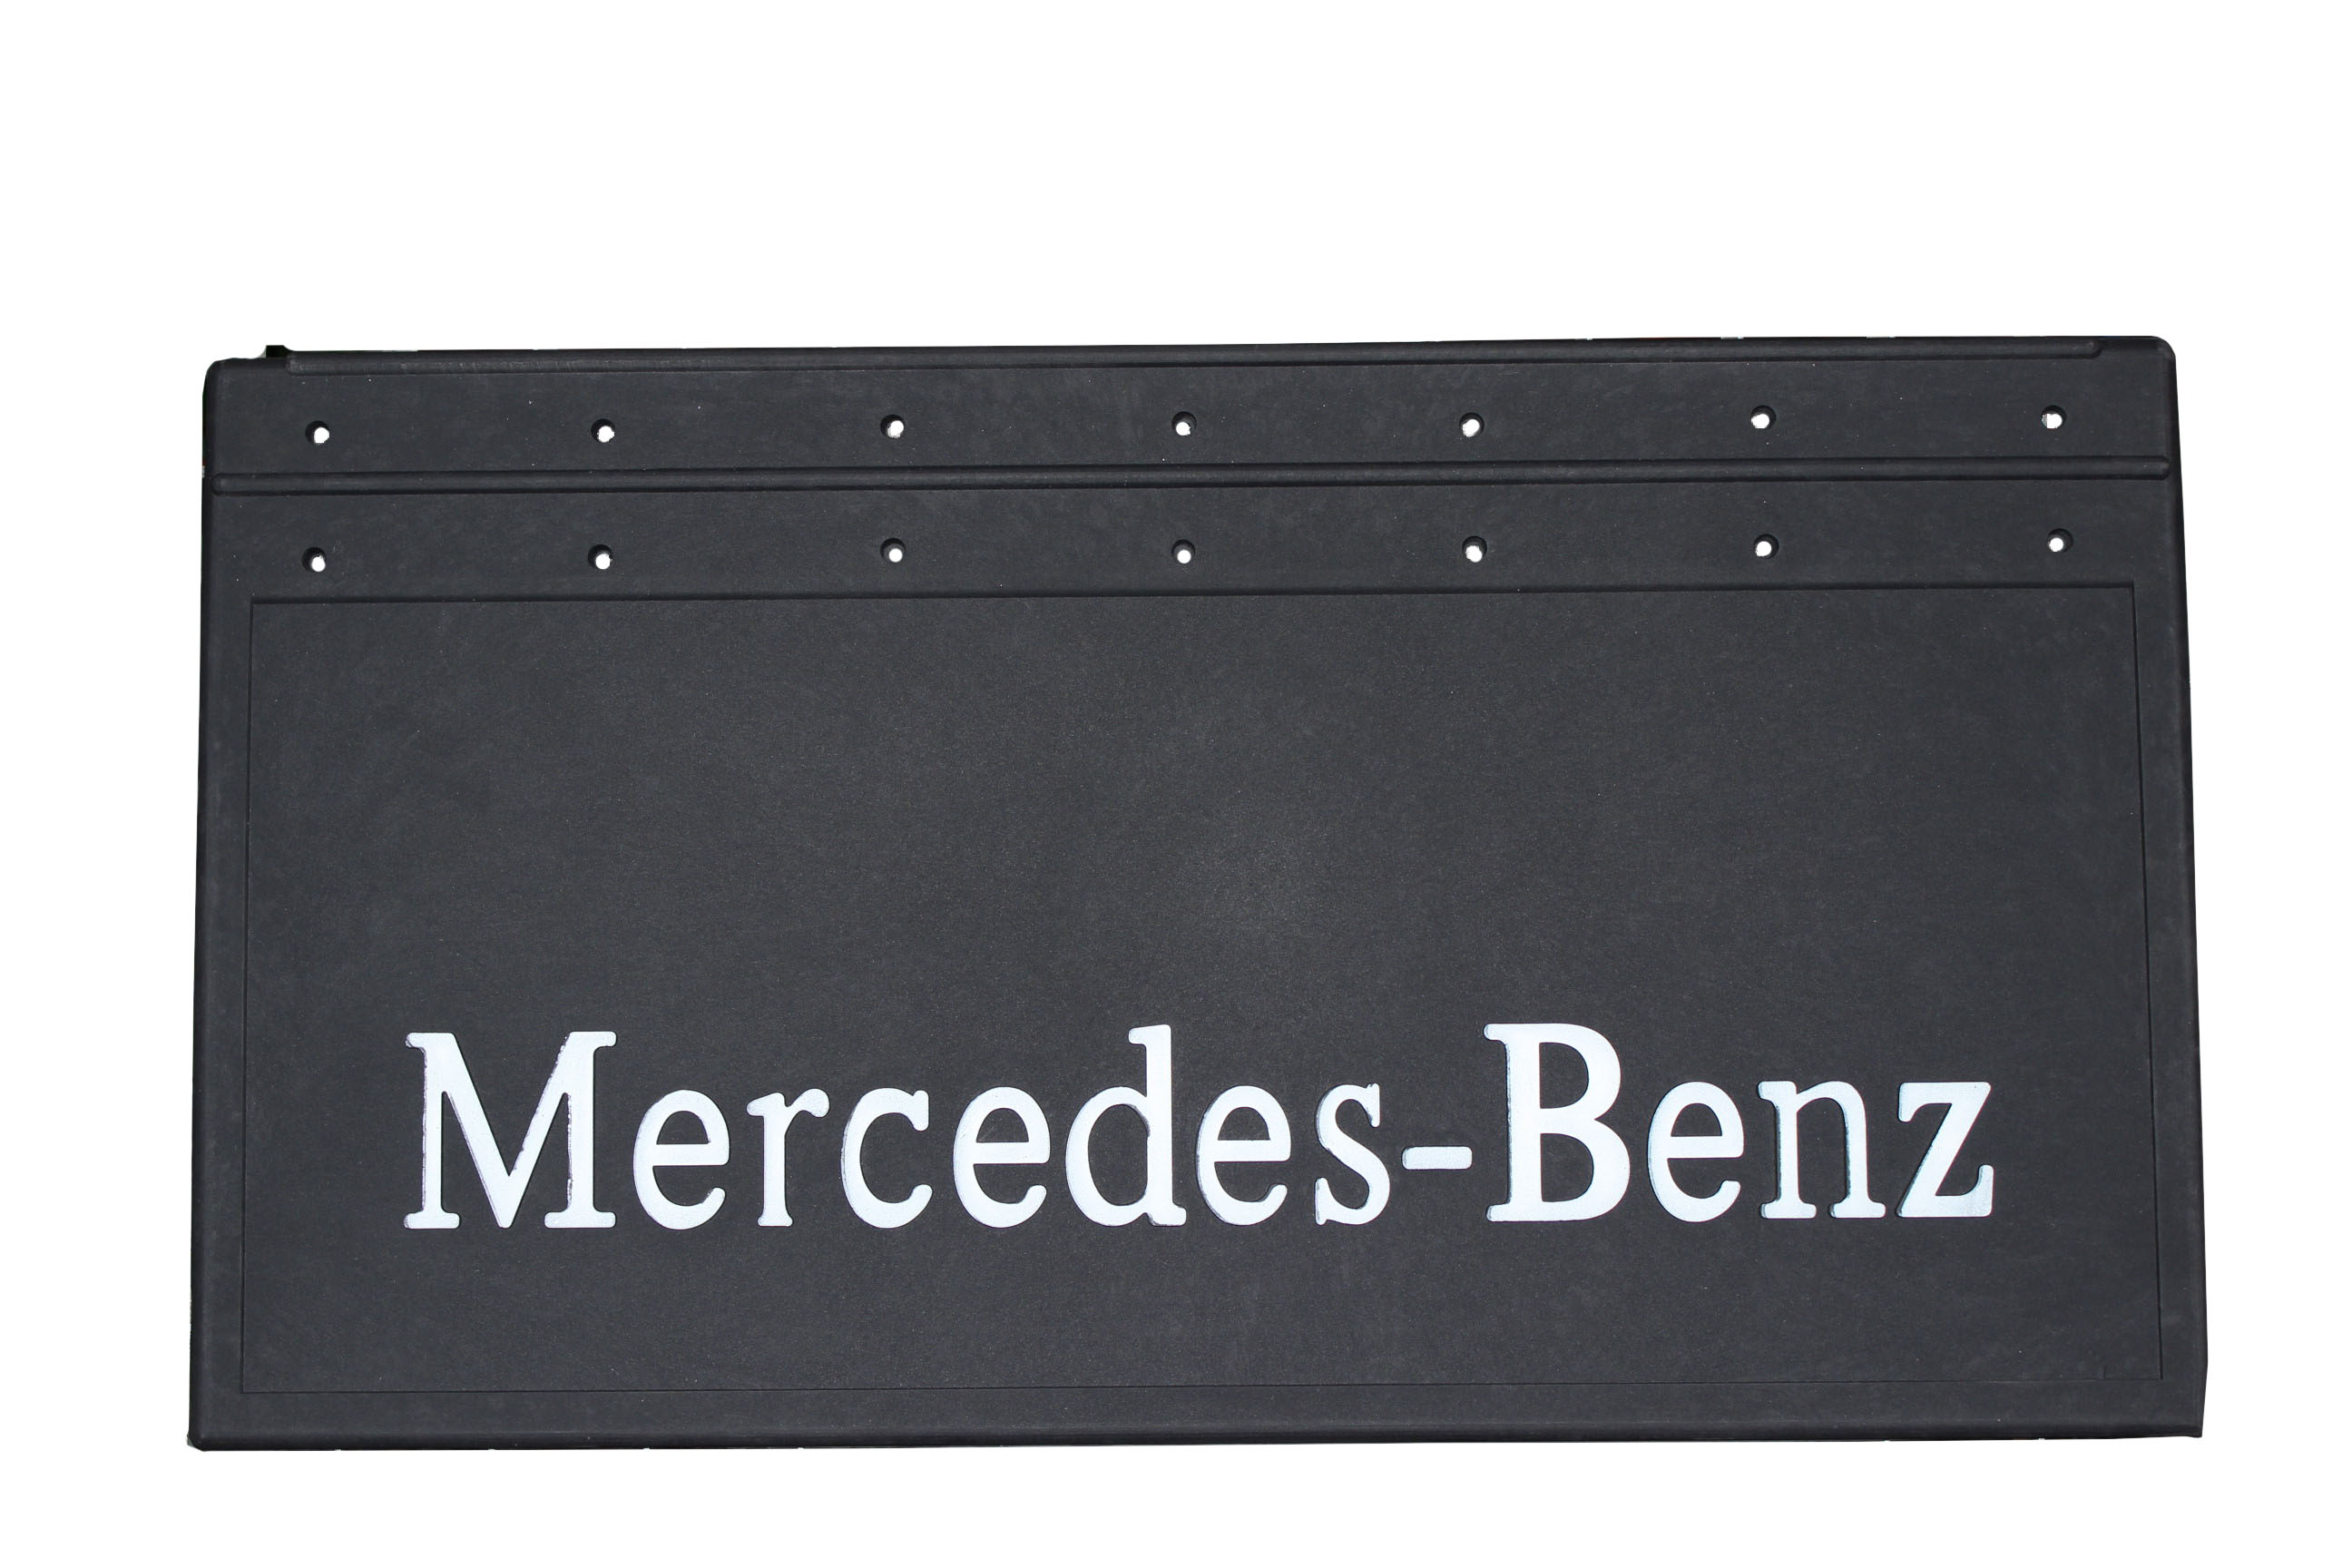 Schmutzfänger Mercedes-Benz 650x350 Spritzschutz Spritzlappen